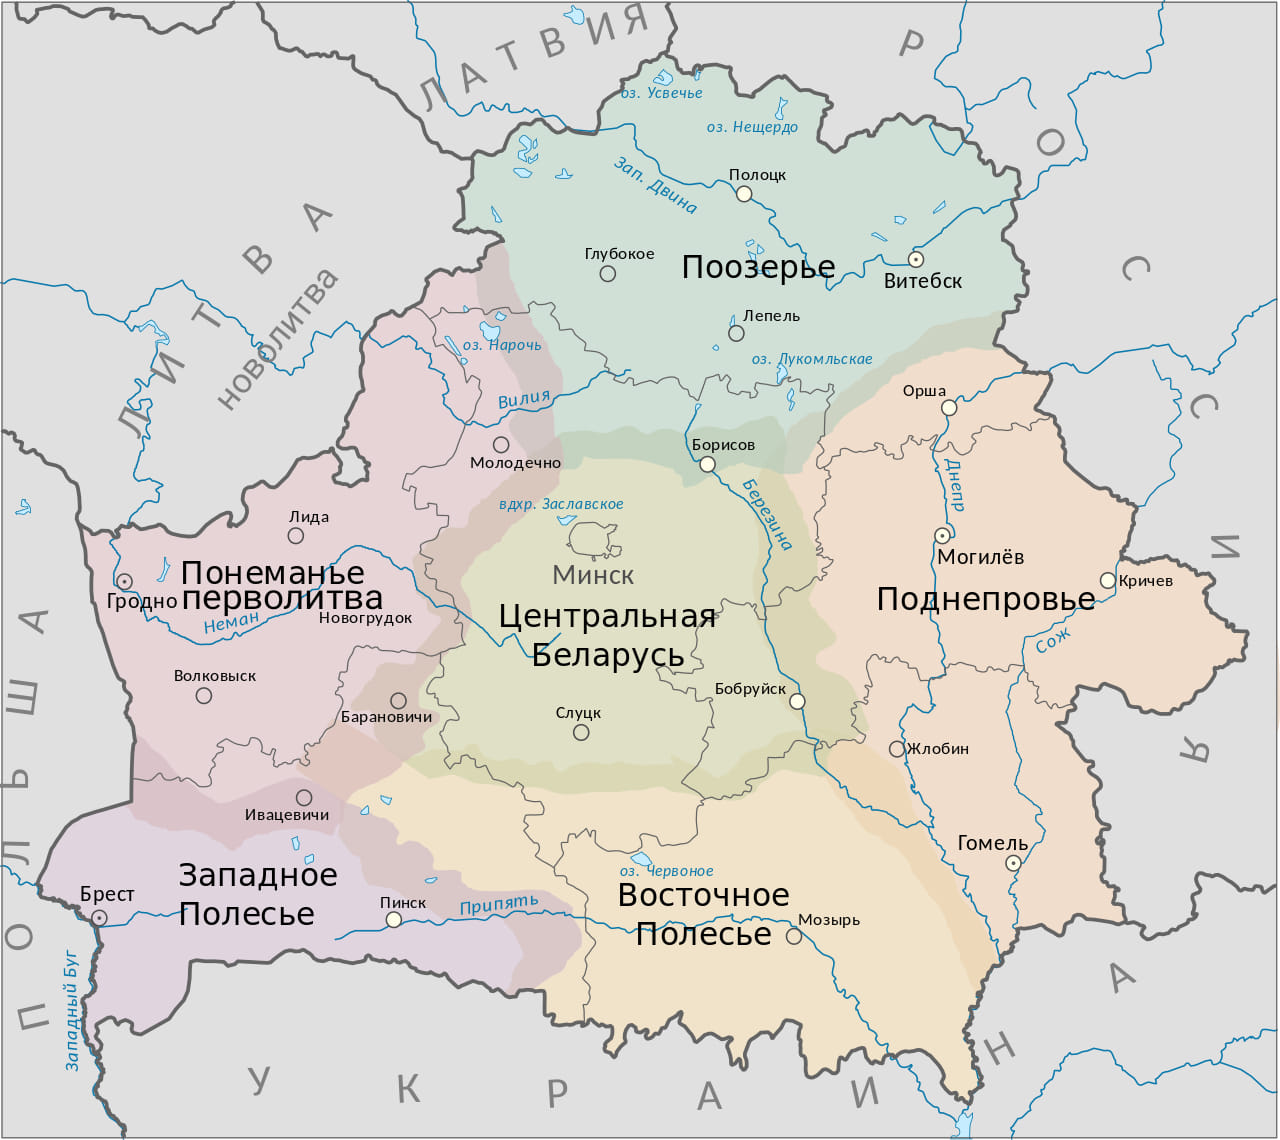 Baltarusijos etnografiniai regionai.jpg